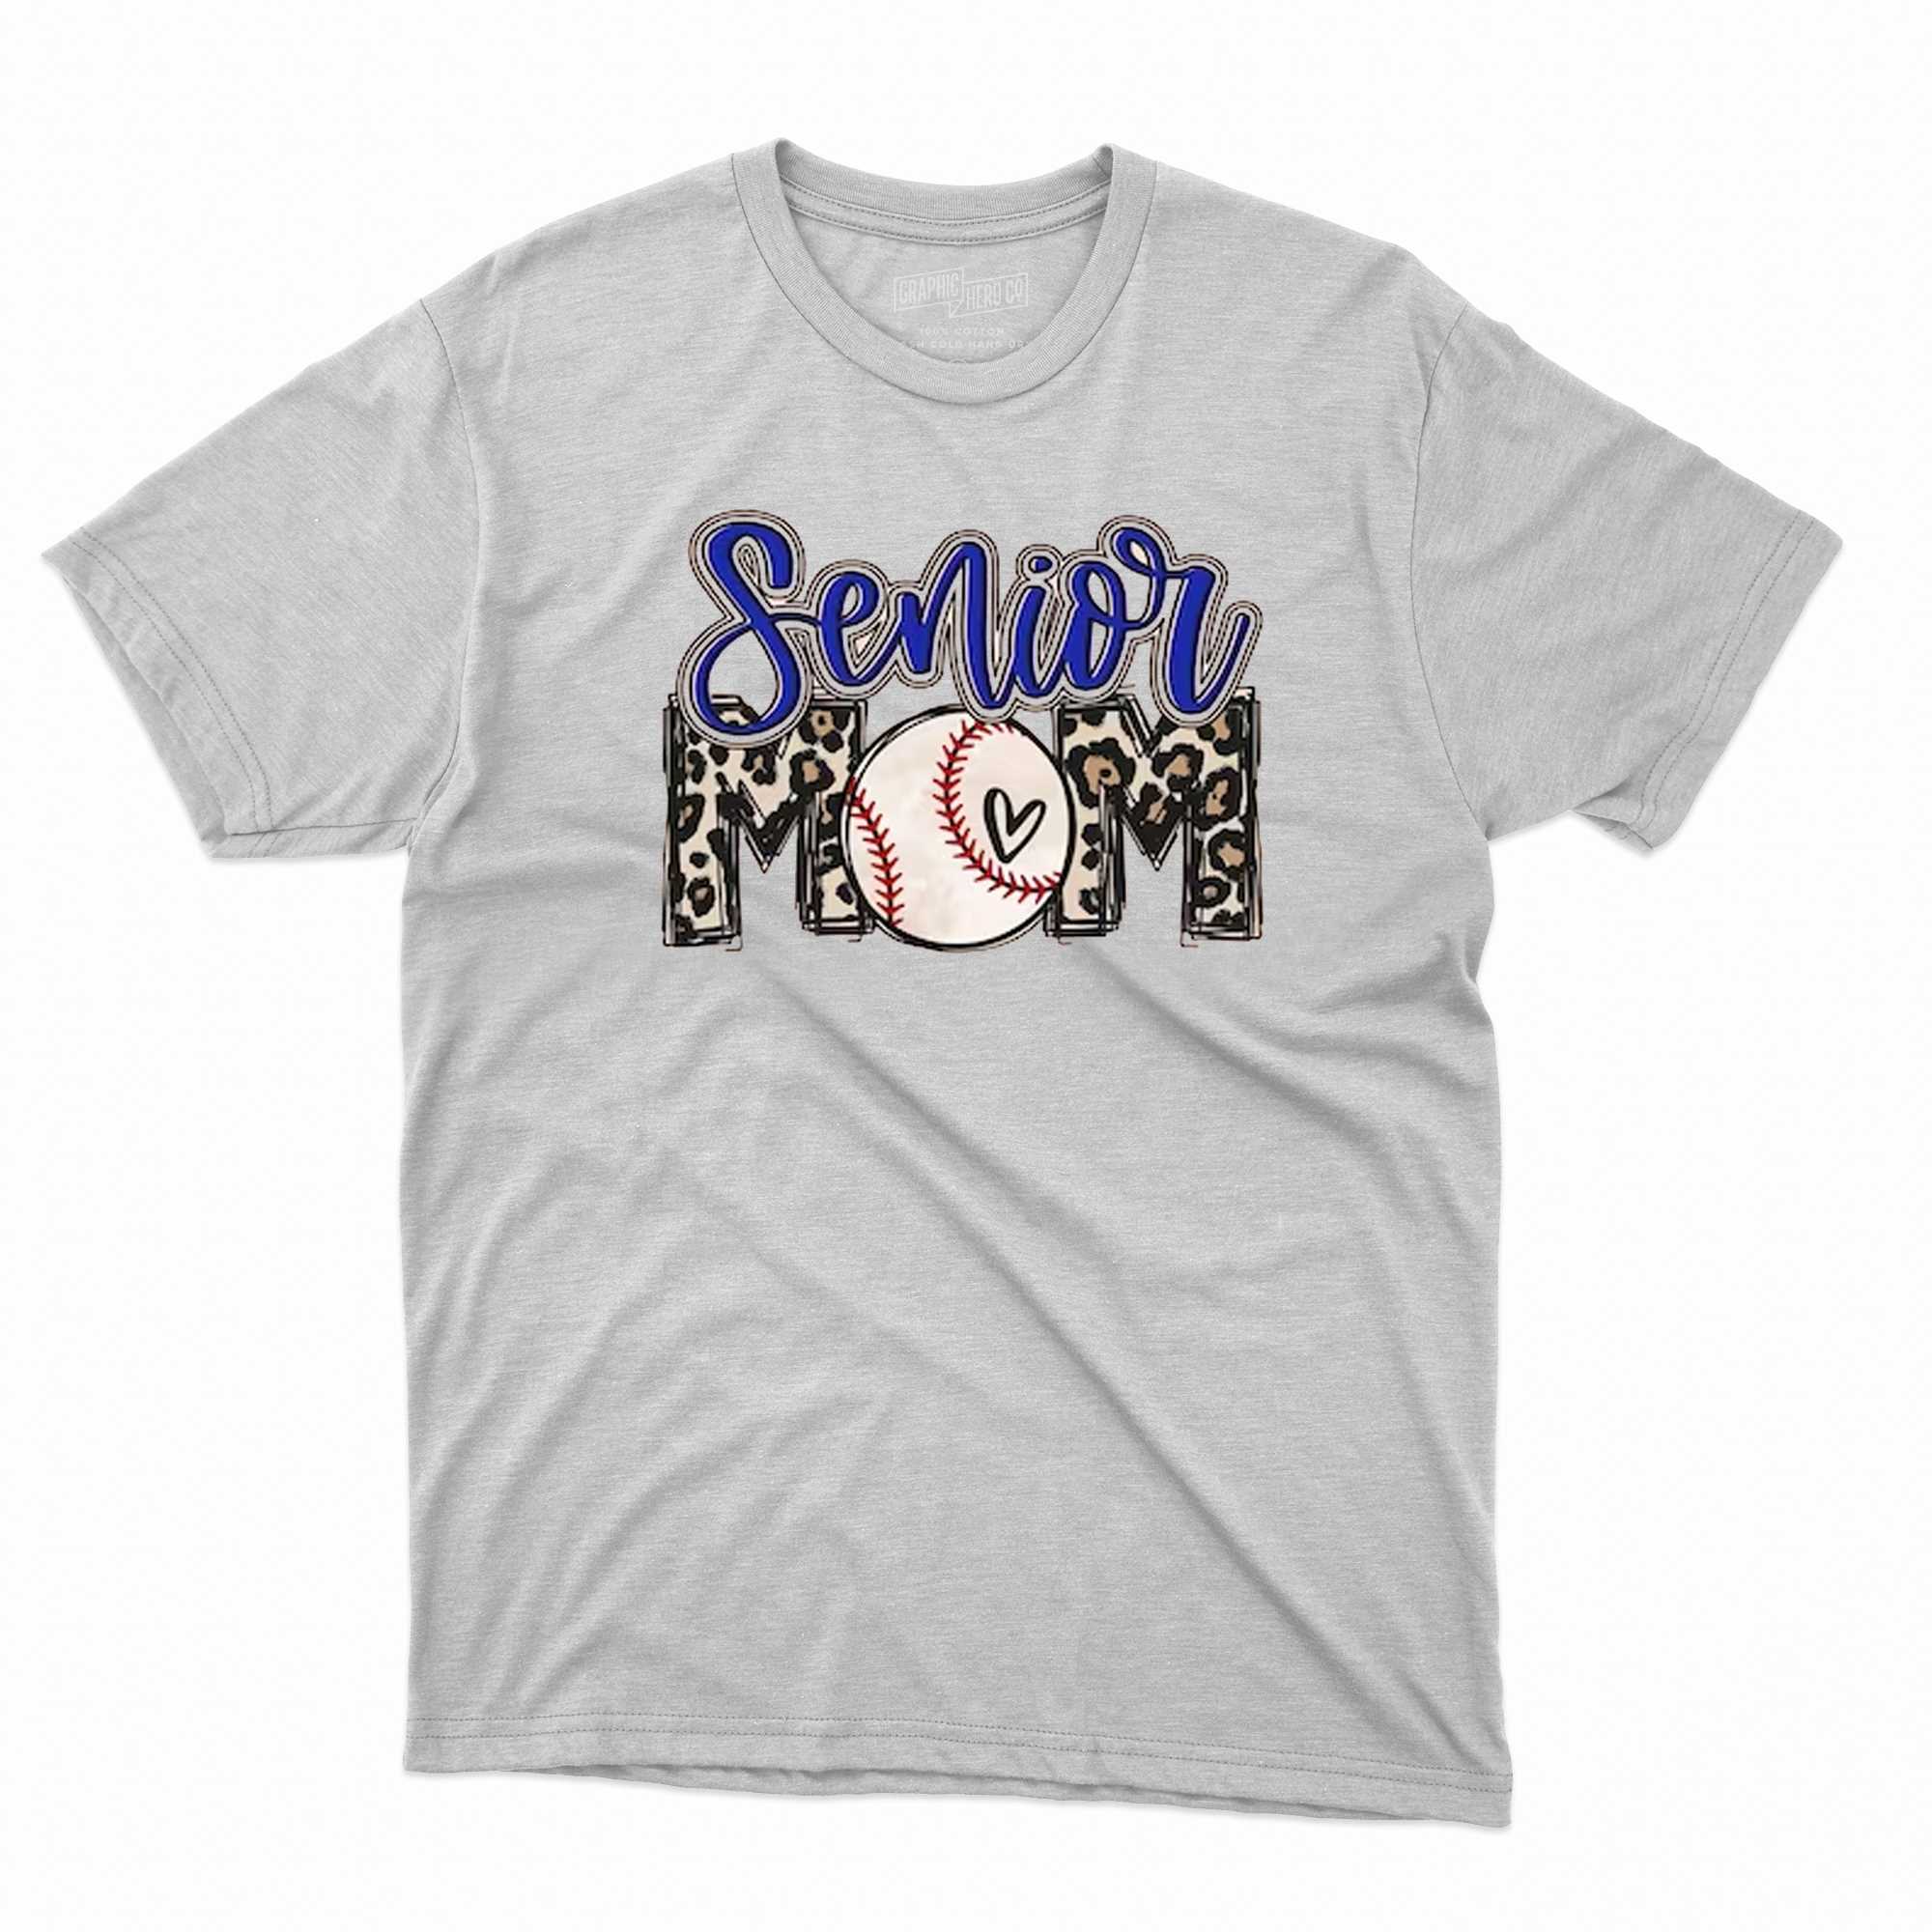 Senior Baseball Mom 2023 T-shirt